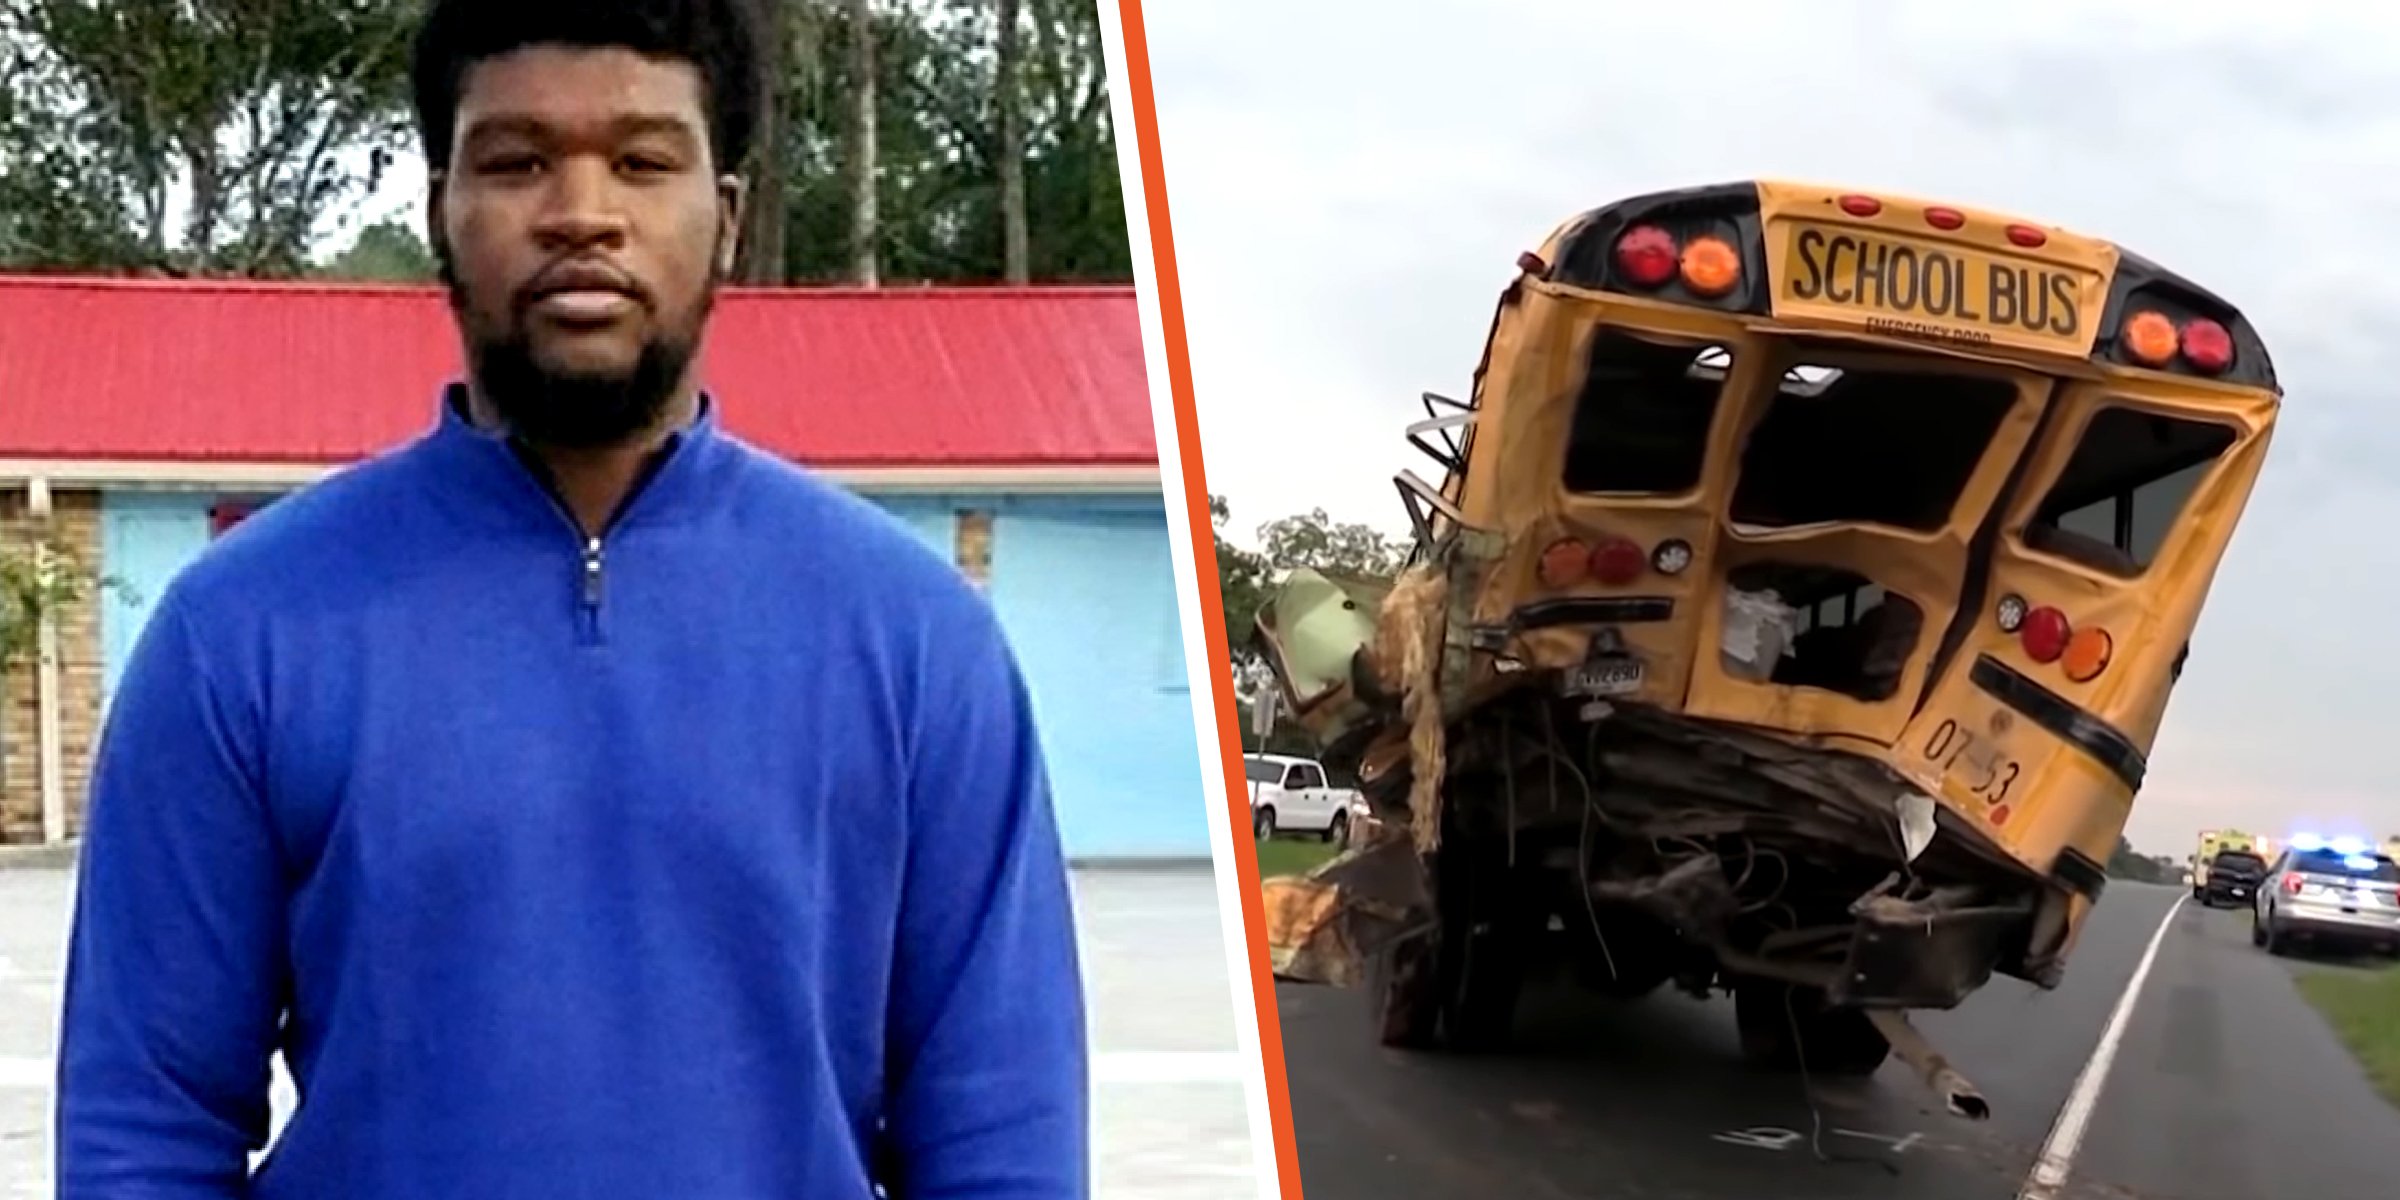 Jonathon Grayer | Le bus scolaire accidenté | Source : facebook.com/WJXT4TheLocalStation | youtube.com/WSAV3